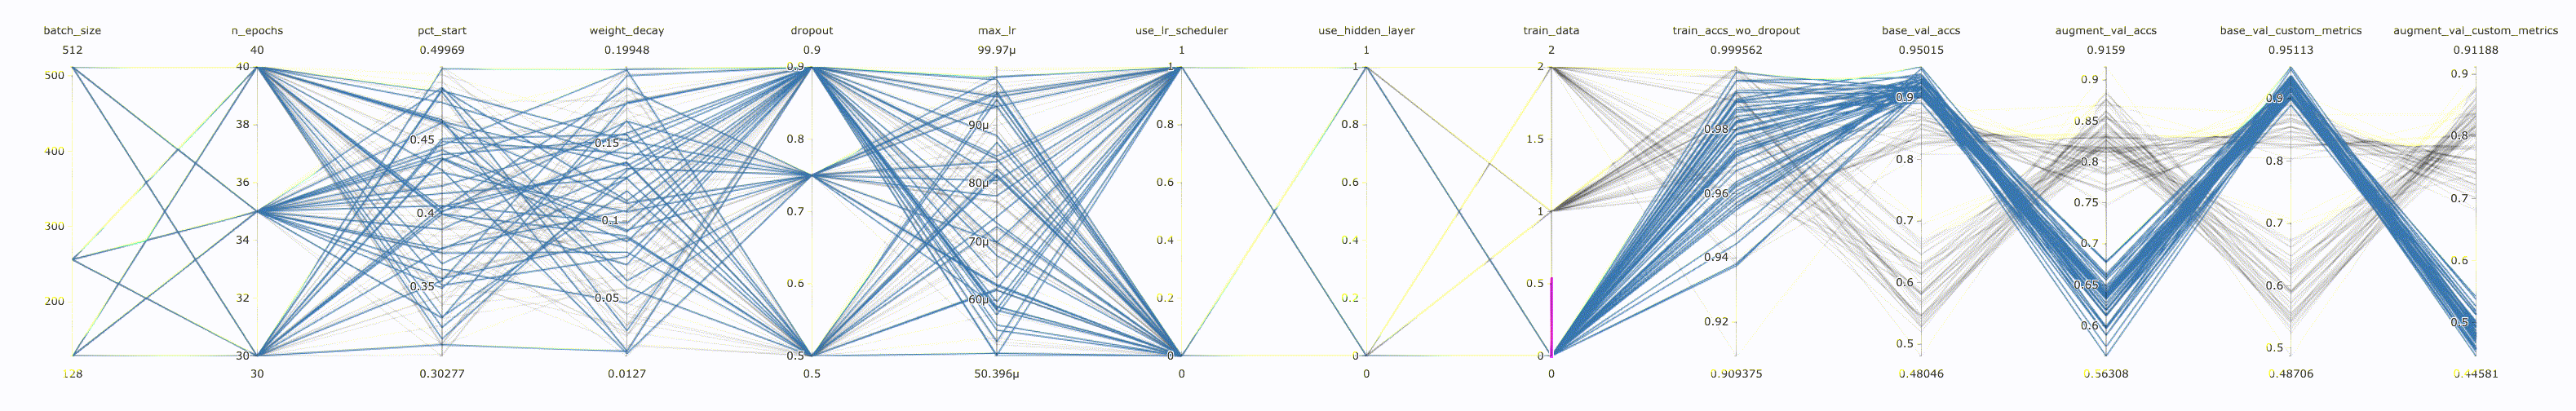 parallel coordinates plot